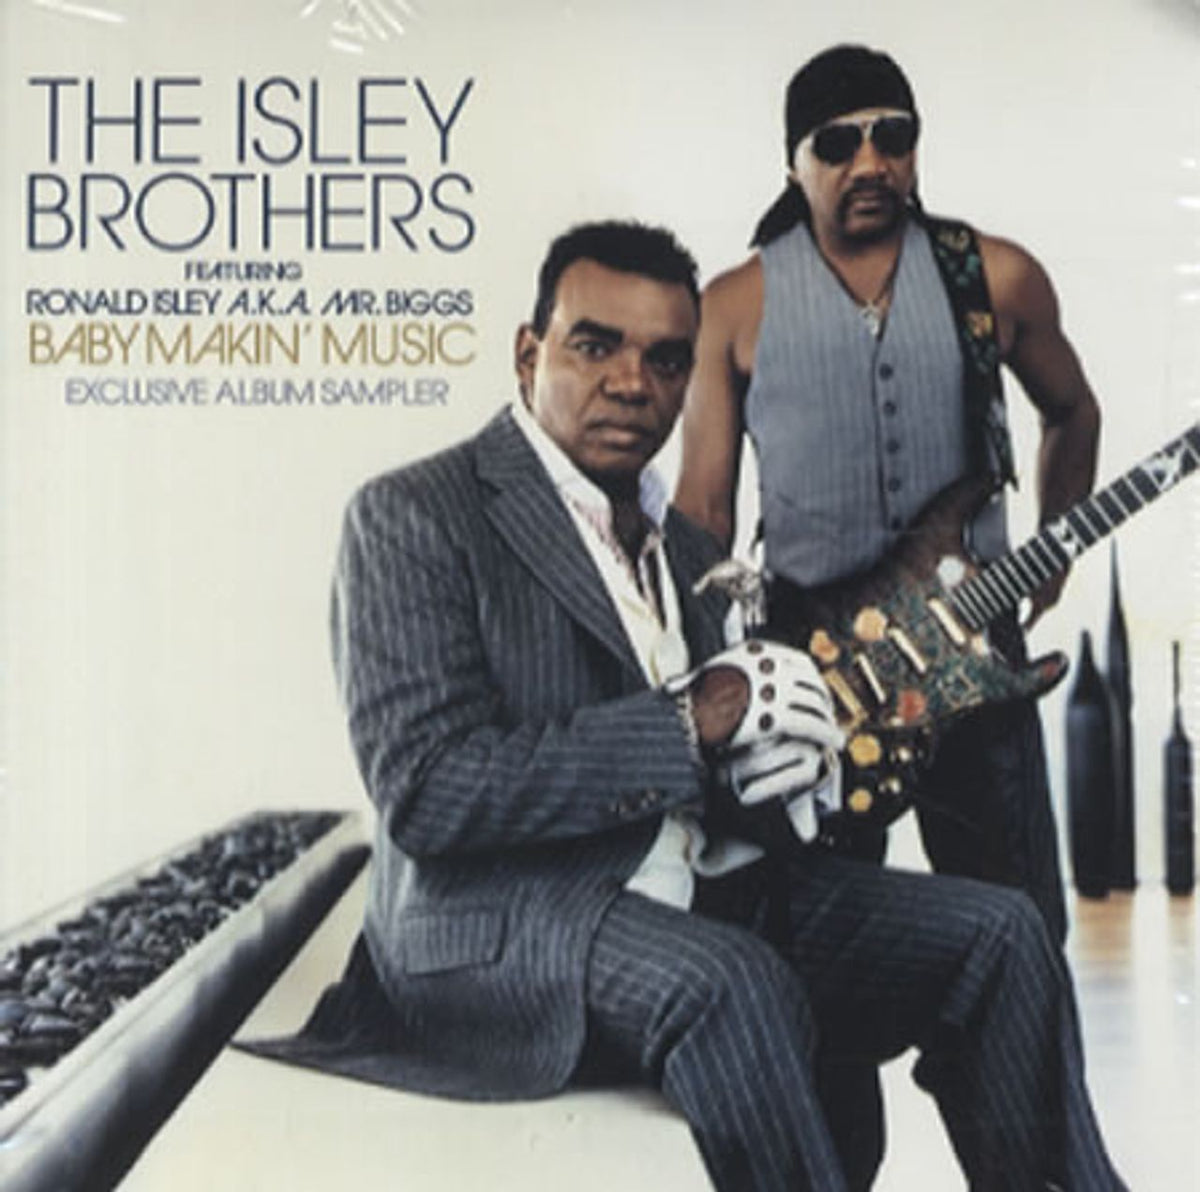 The Isley Brothers Baby Makin' Music - Album Sampler US